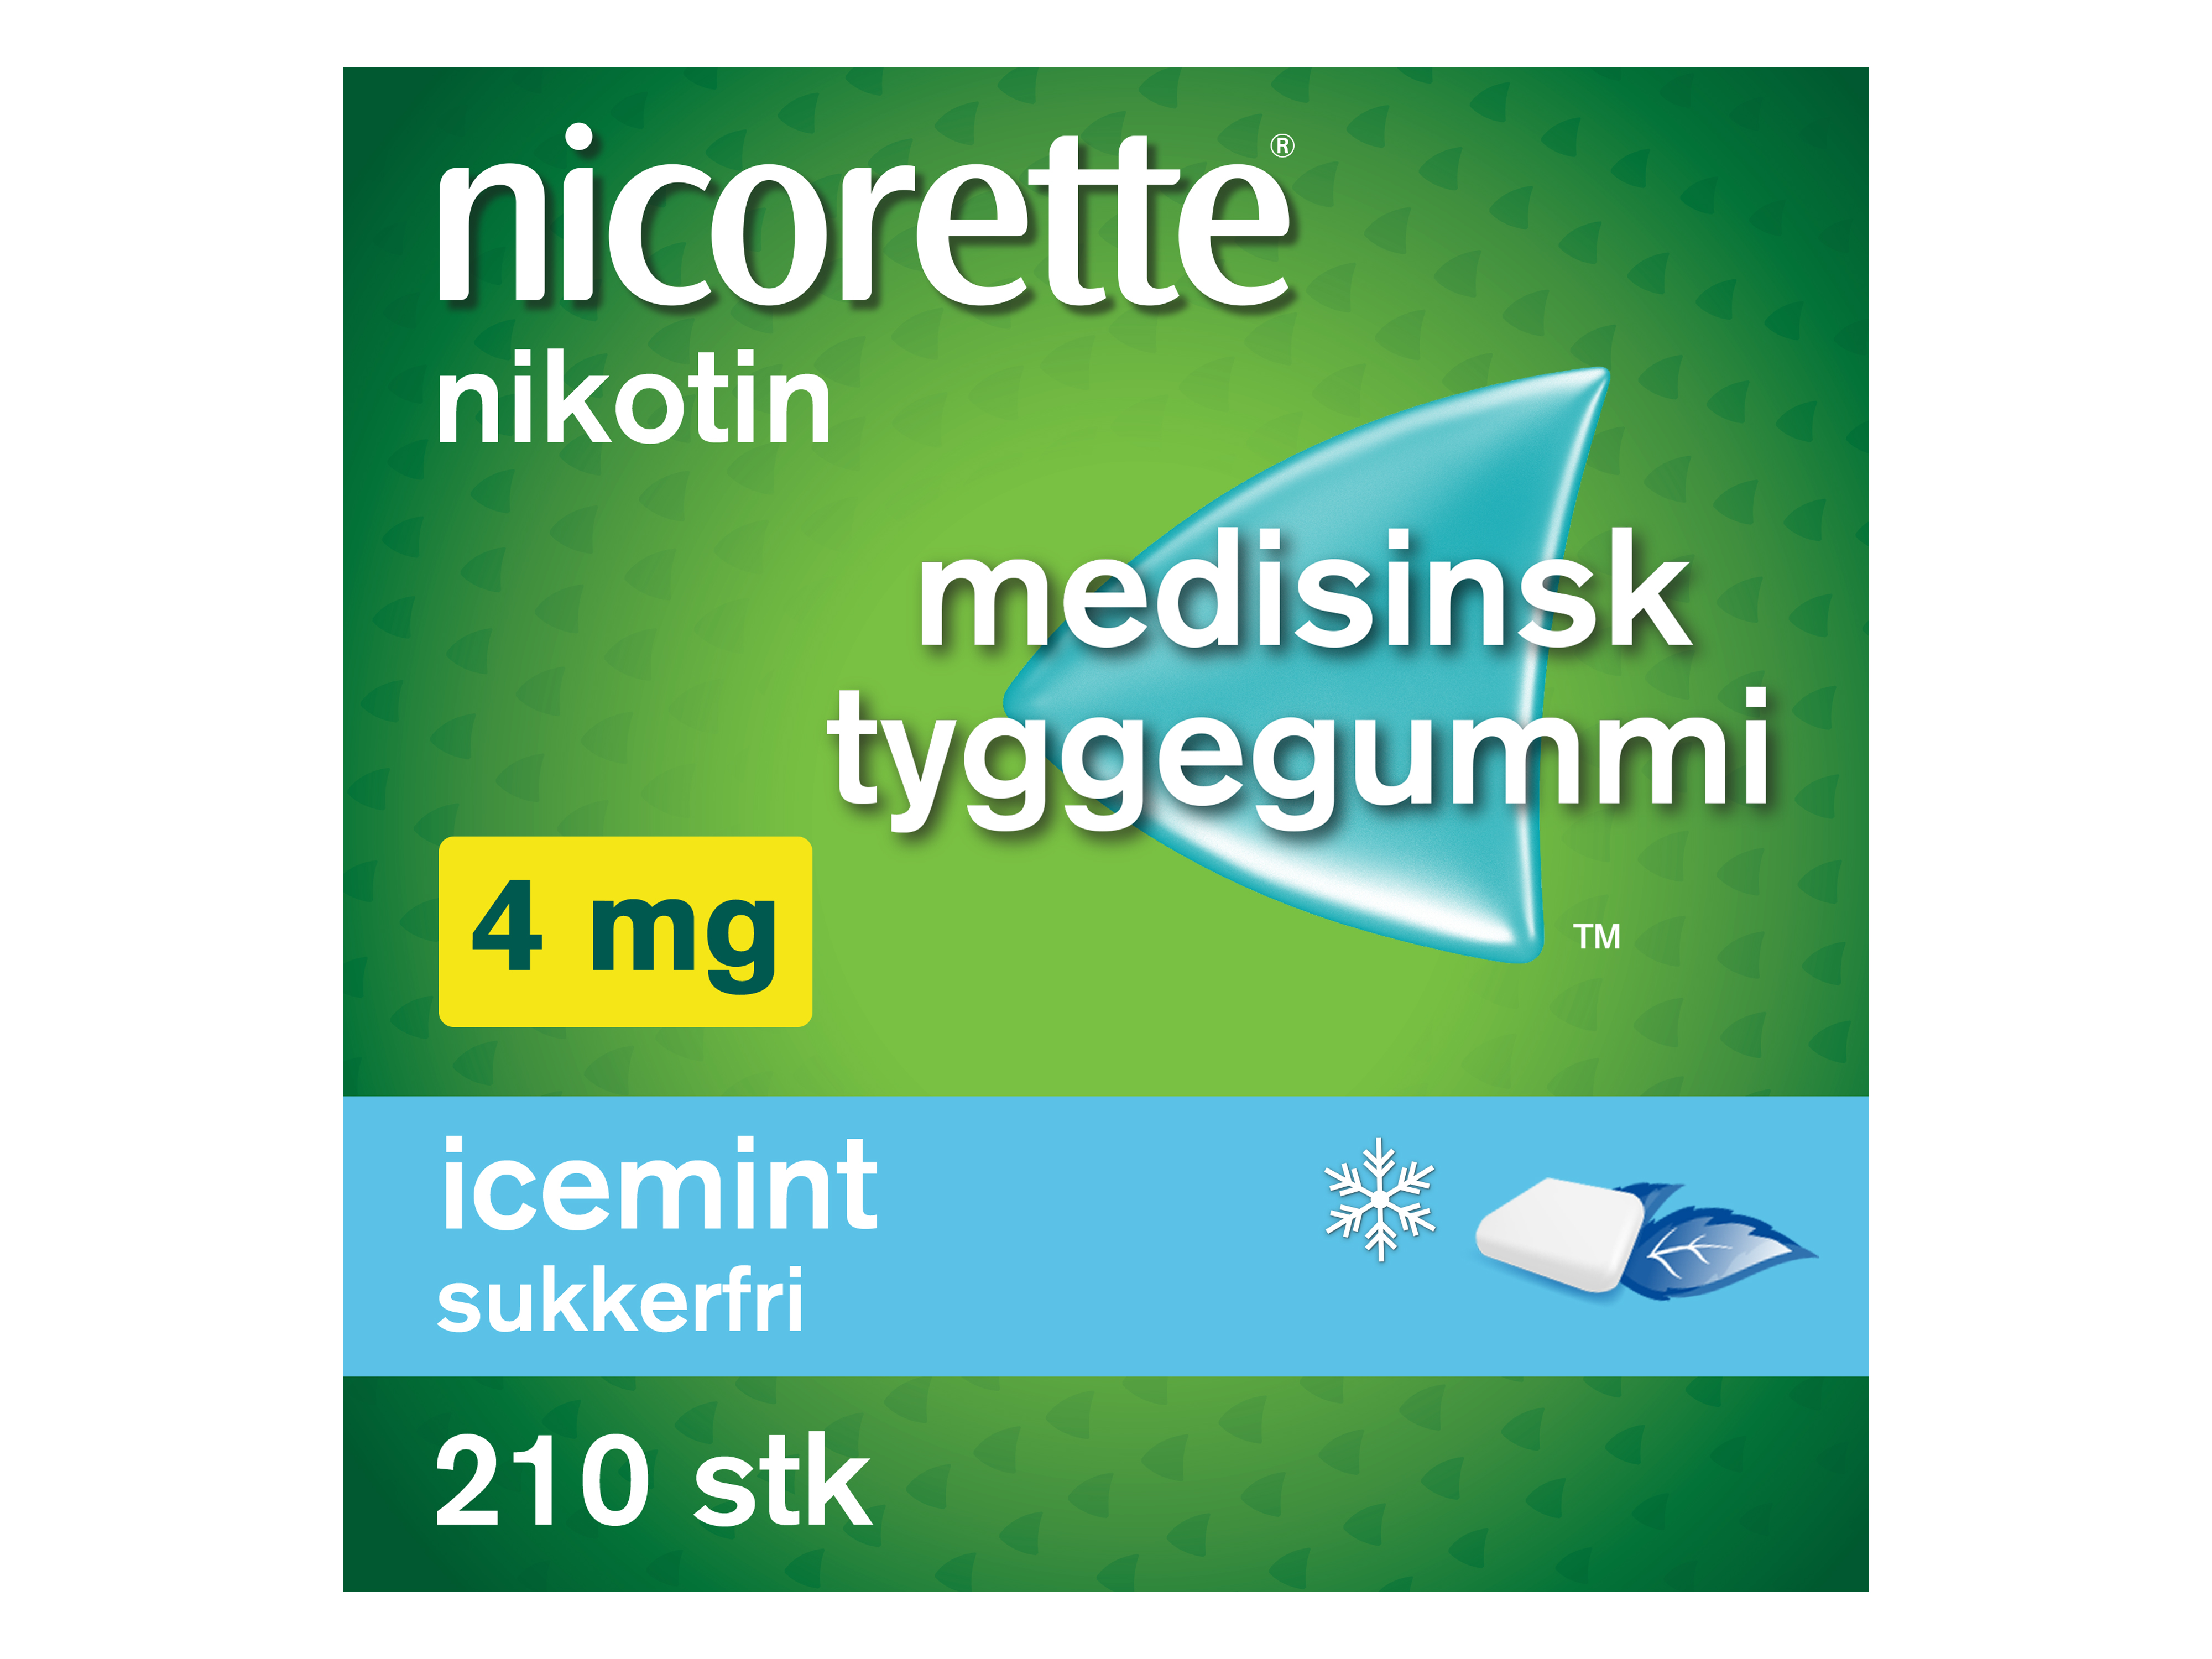 Nicorette Tyggegummi, 4 mg nikotin, Icemint 210 stk., Slutte å røyke